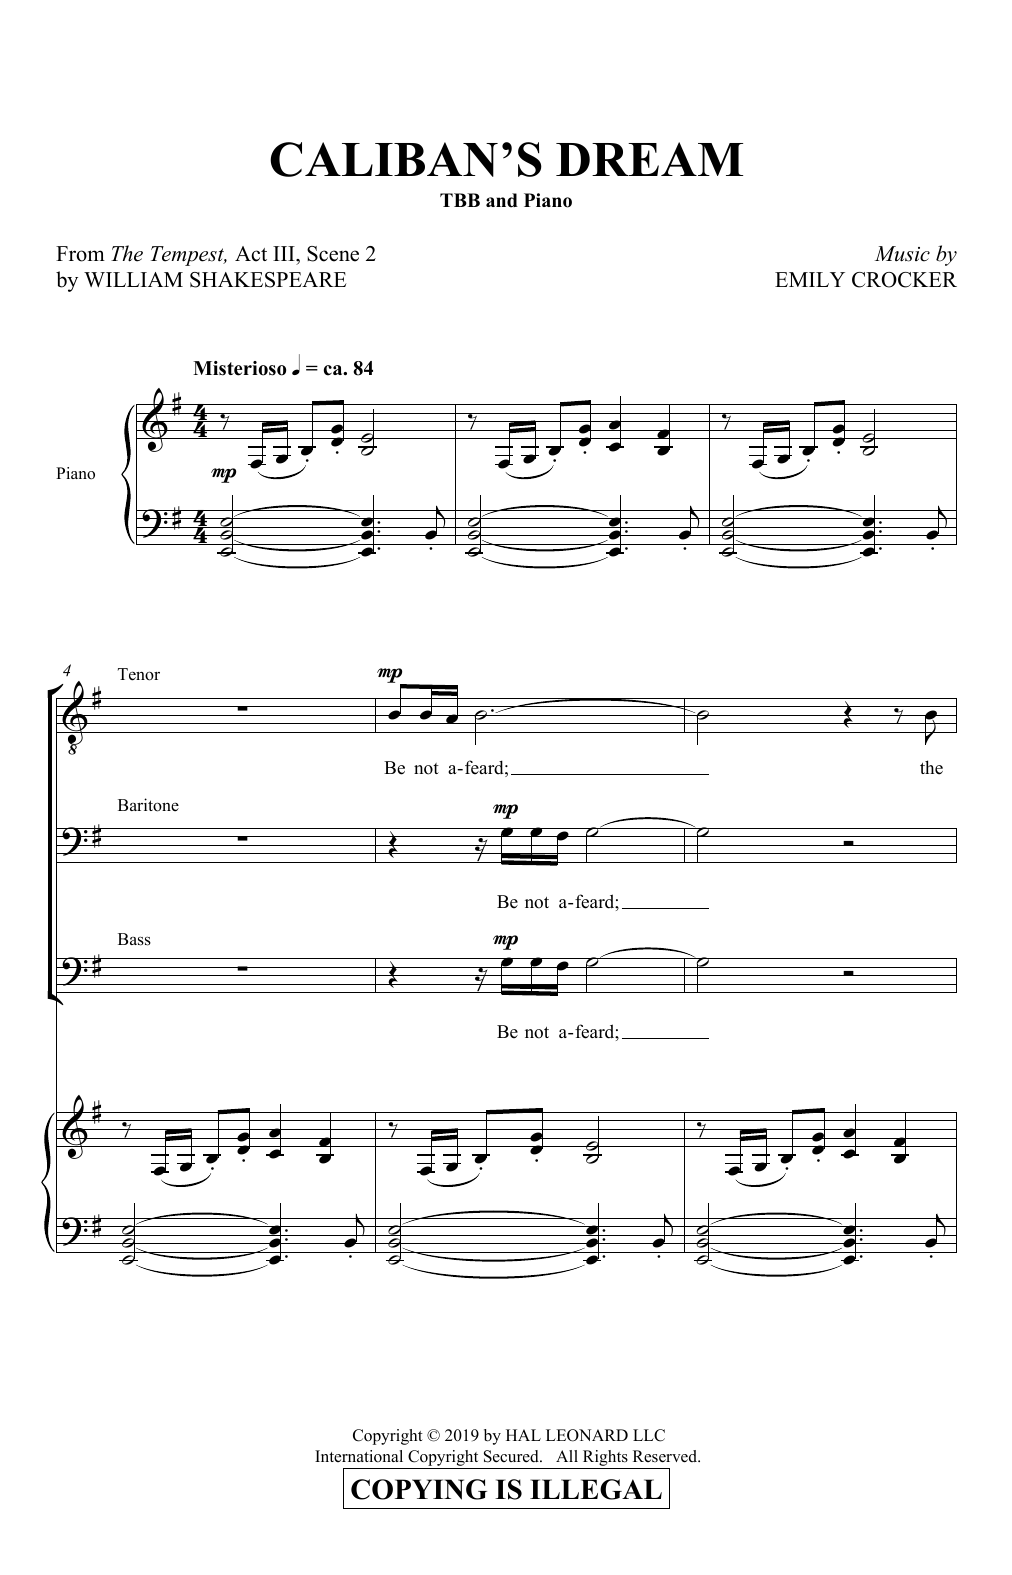 Emily Crocker Caliban's Dream Sheet Music Notes & Chords for TBB Choir - Download or Print PDF